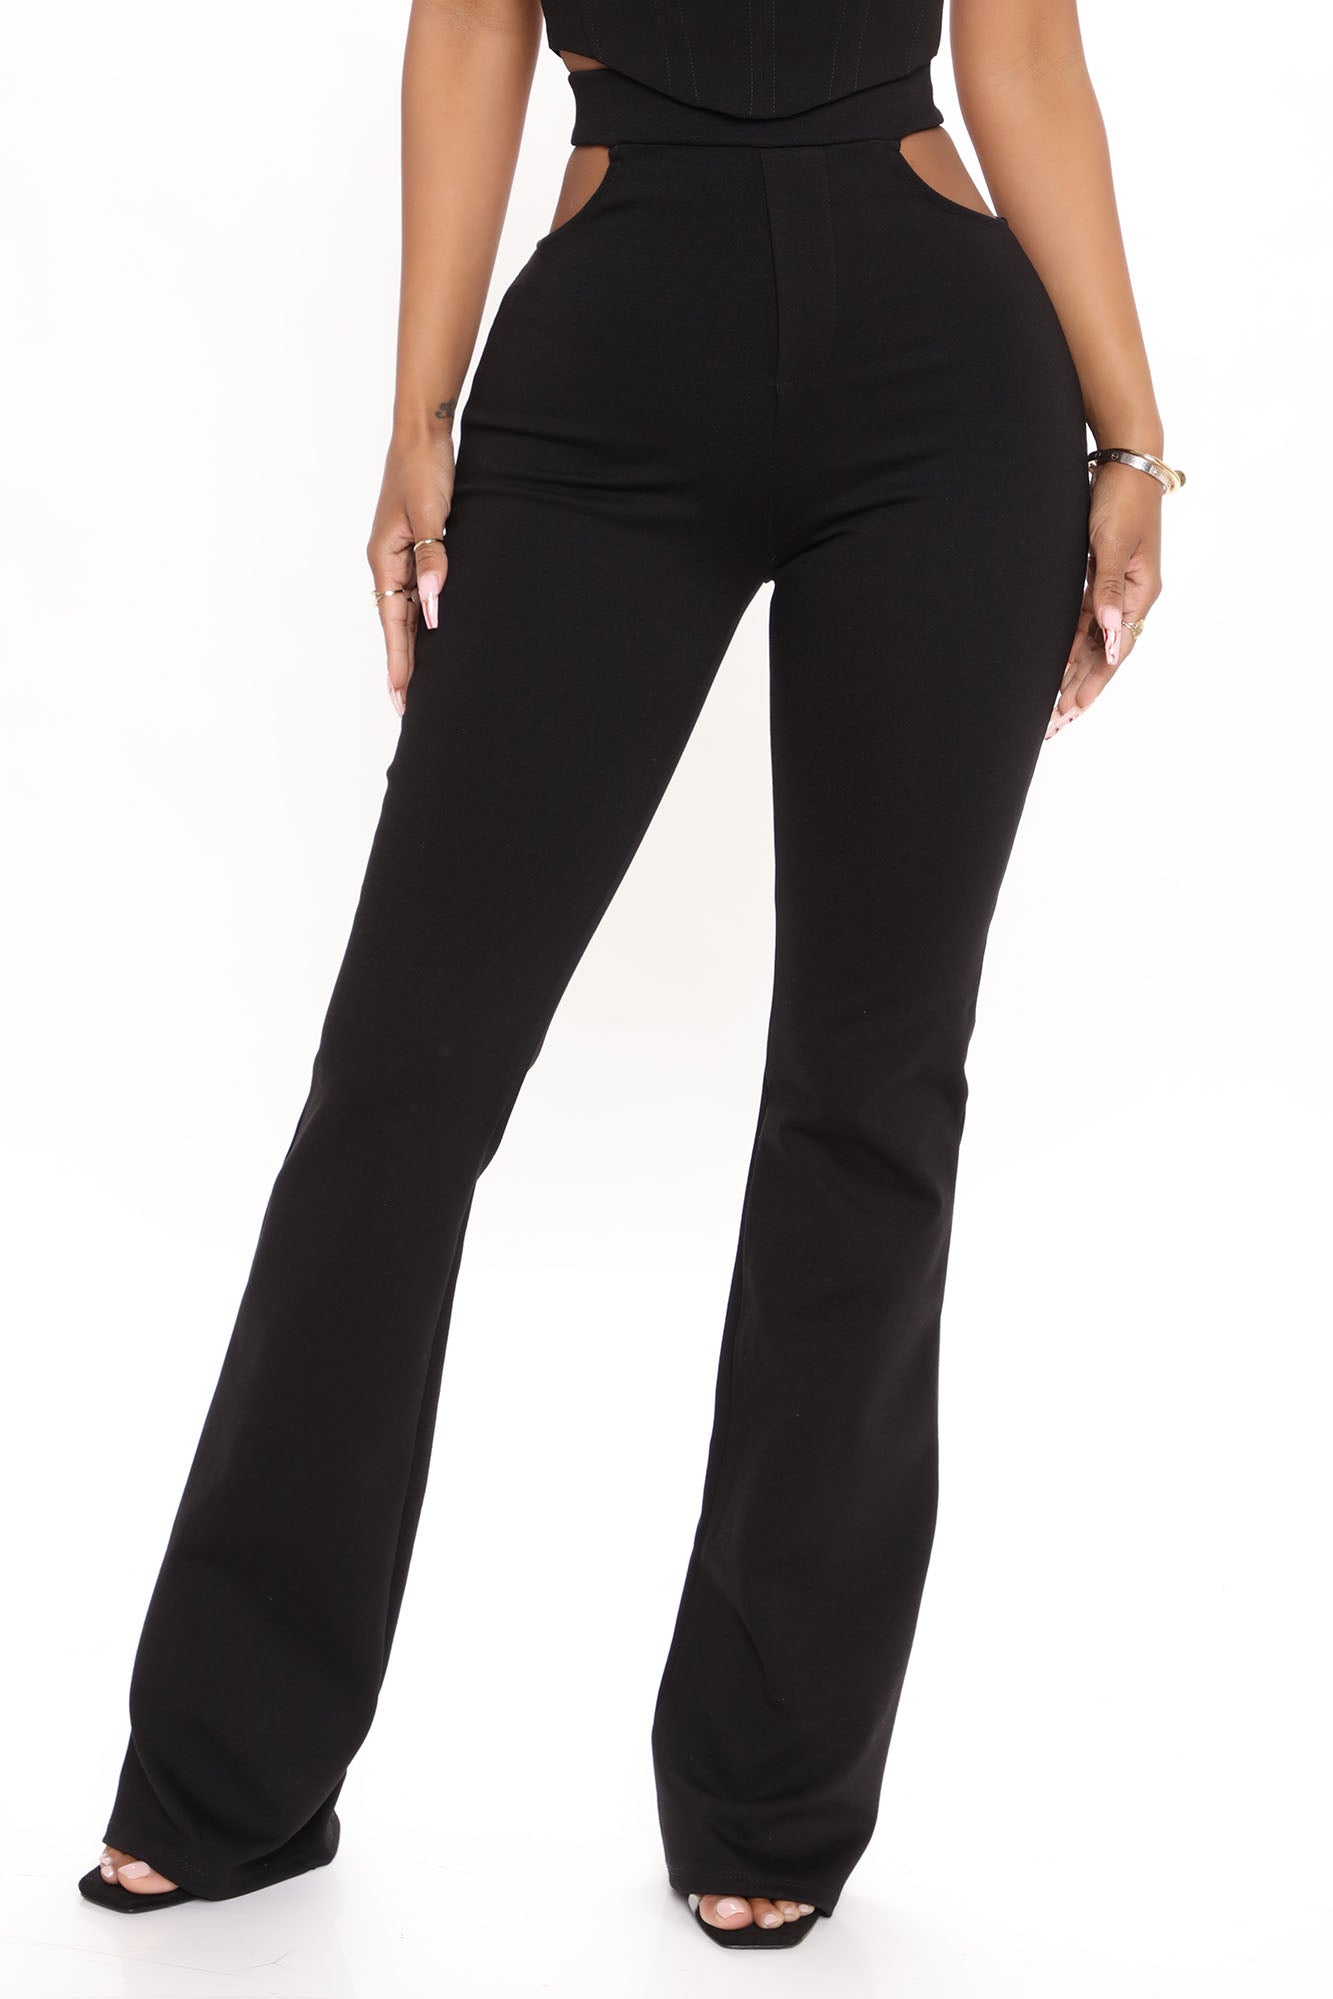 Layers To This Flare Pant - Black | Fashion Nova, Pants | Fashion Nova